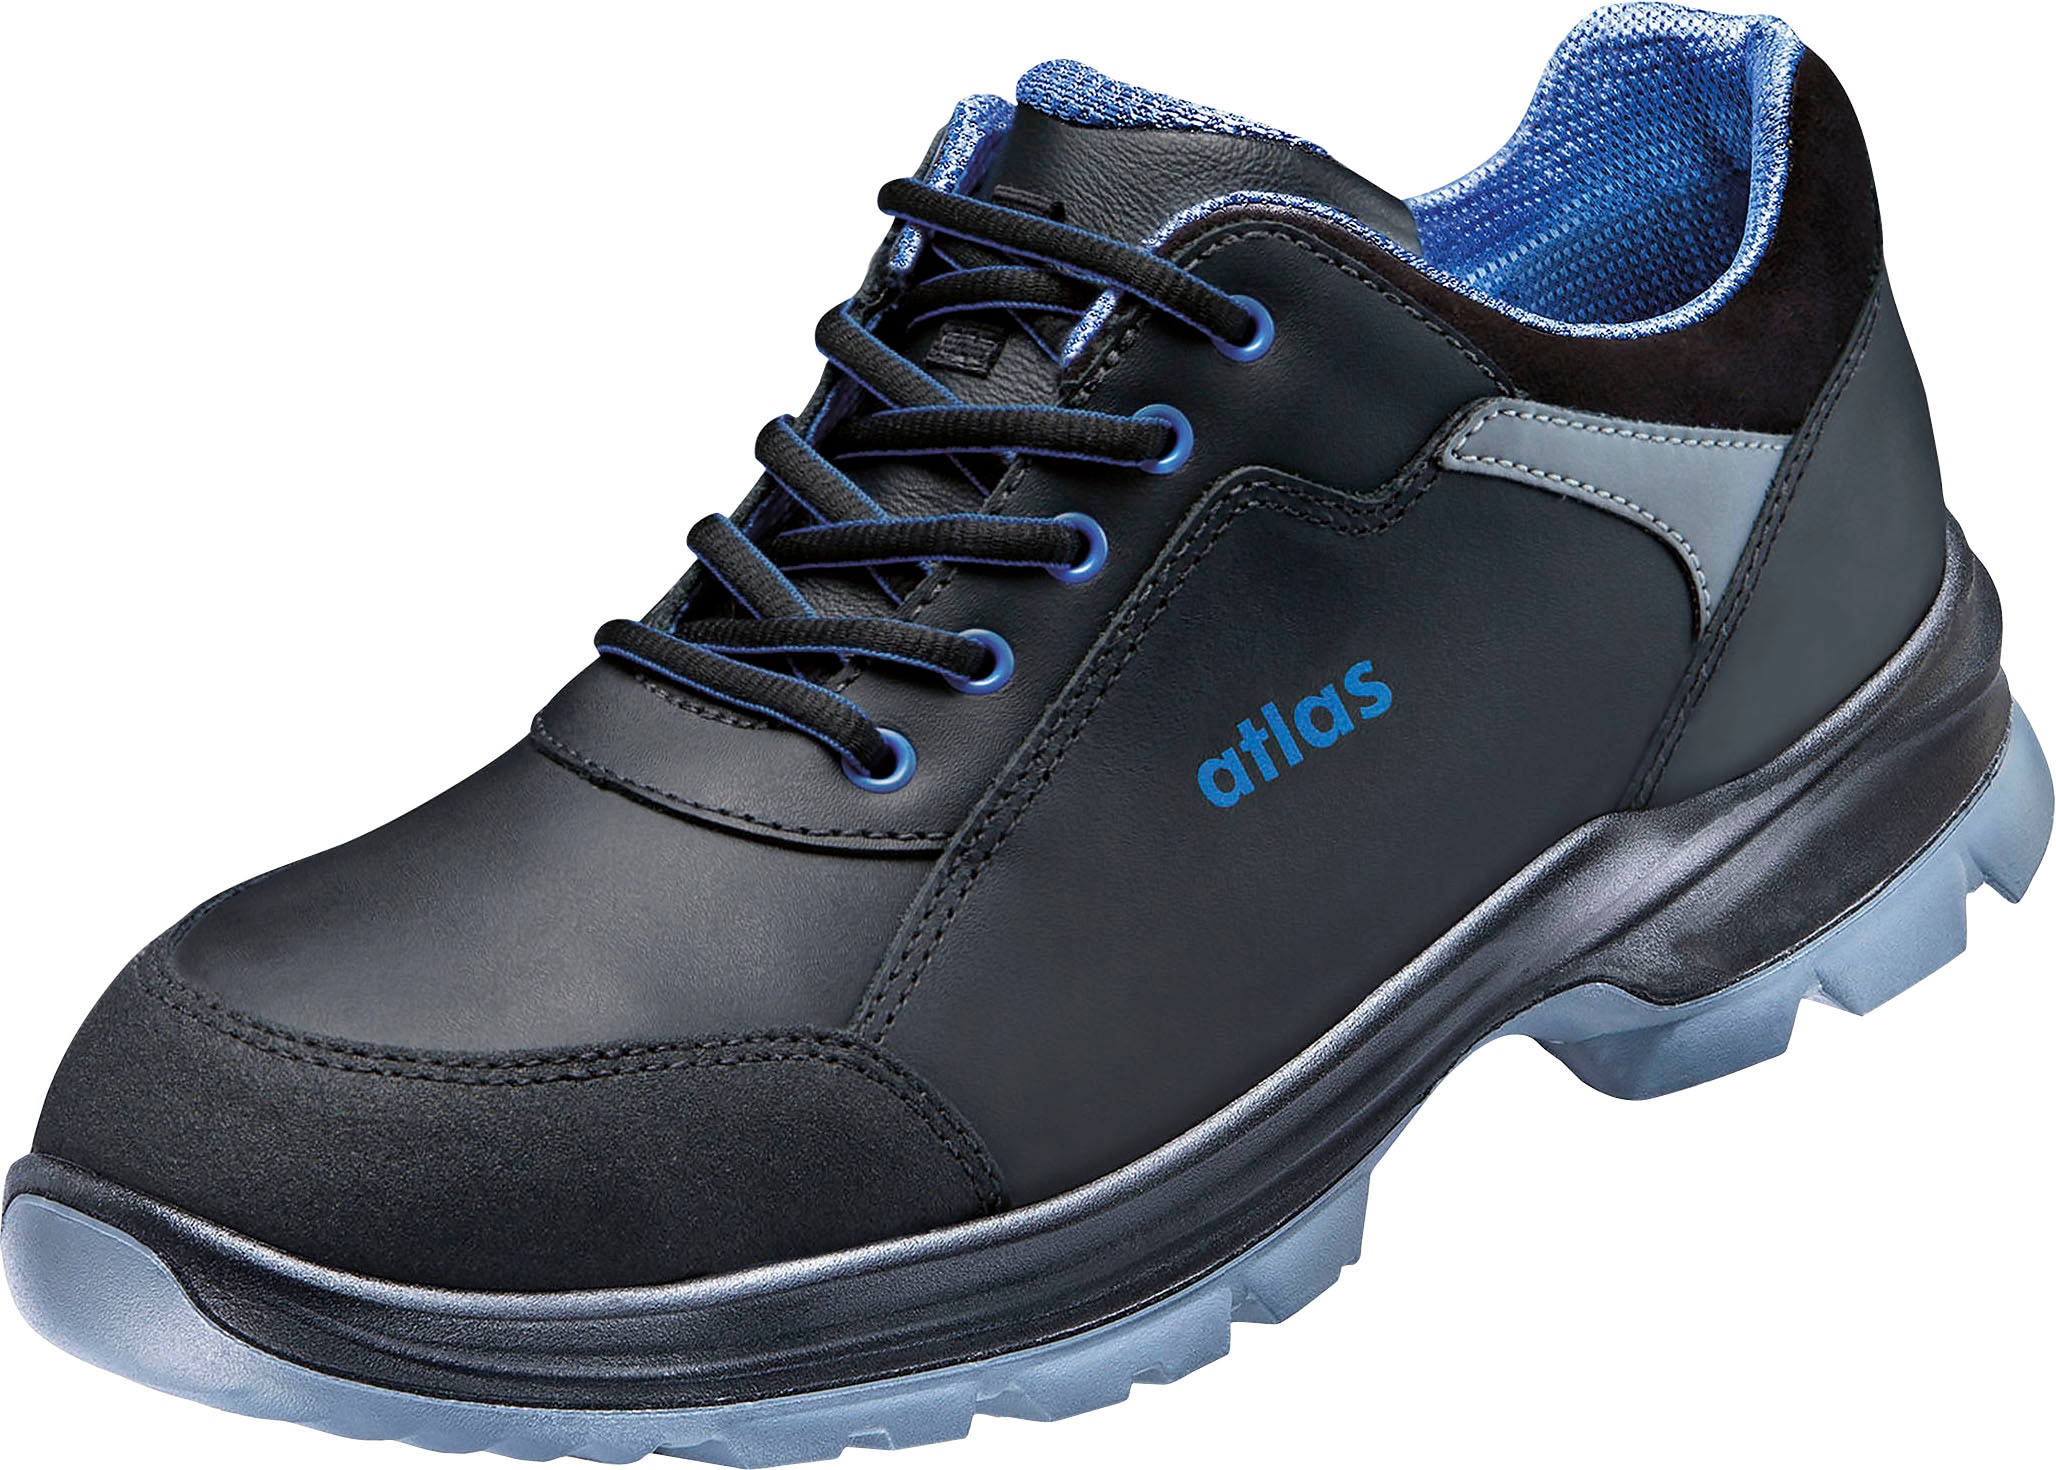 Schuhe Arbeitsschuh bei 565«, OTTO Atlas »Alu-Tec S3 kaufen